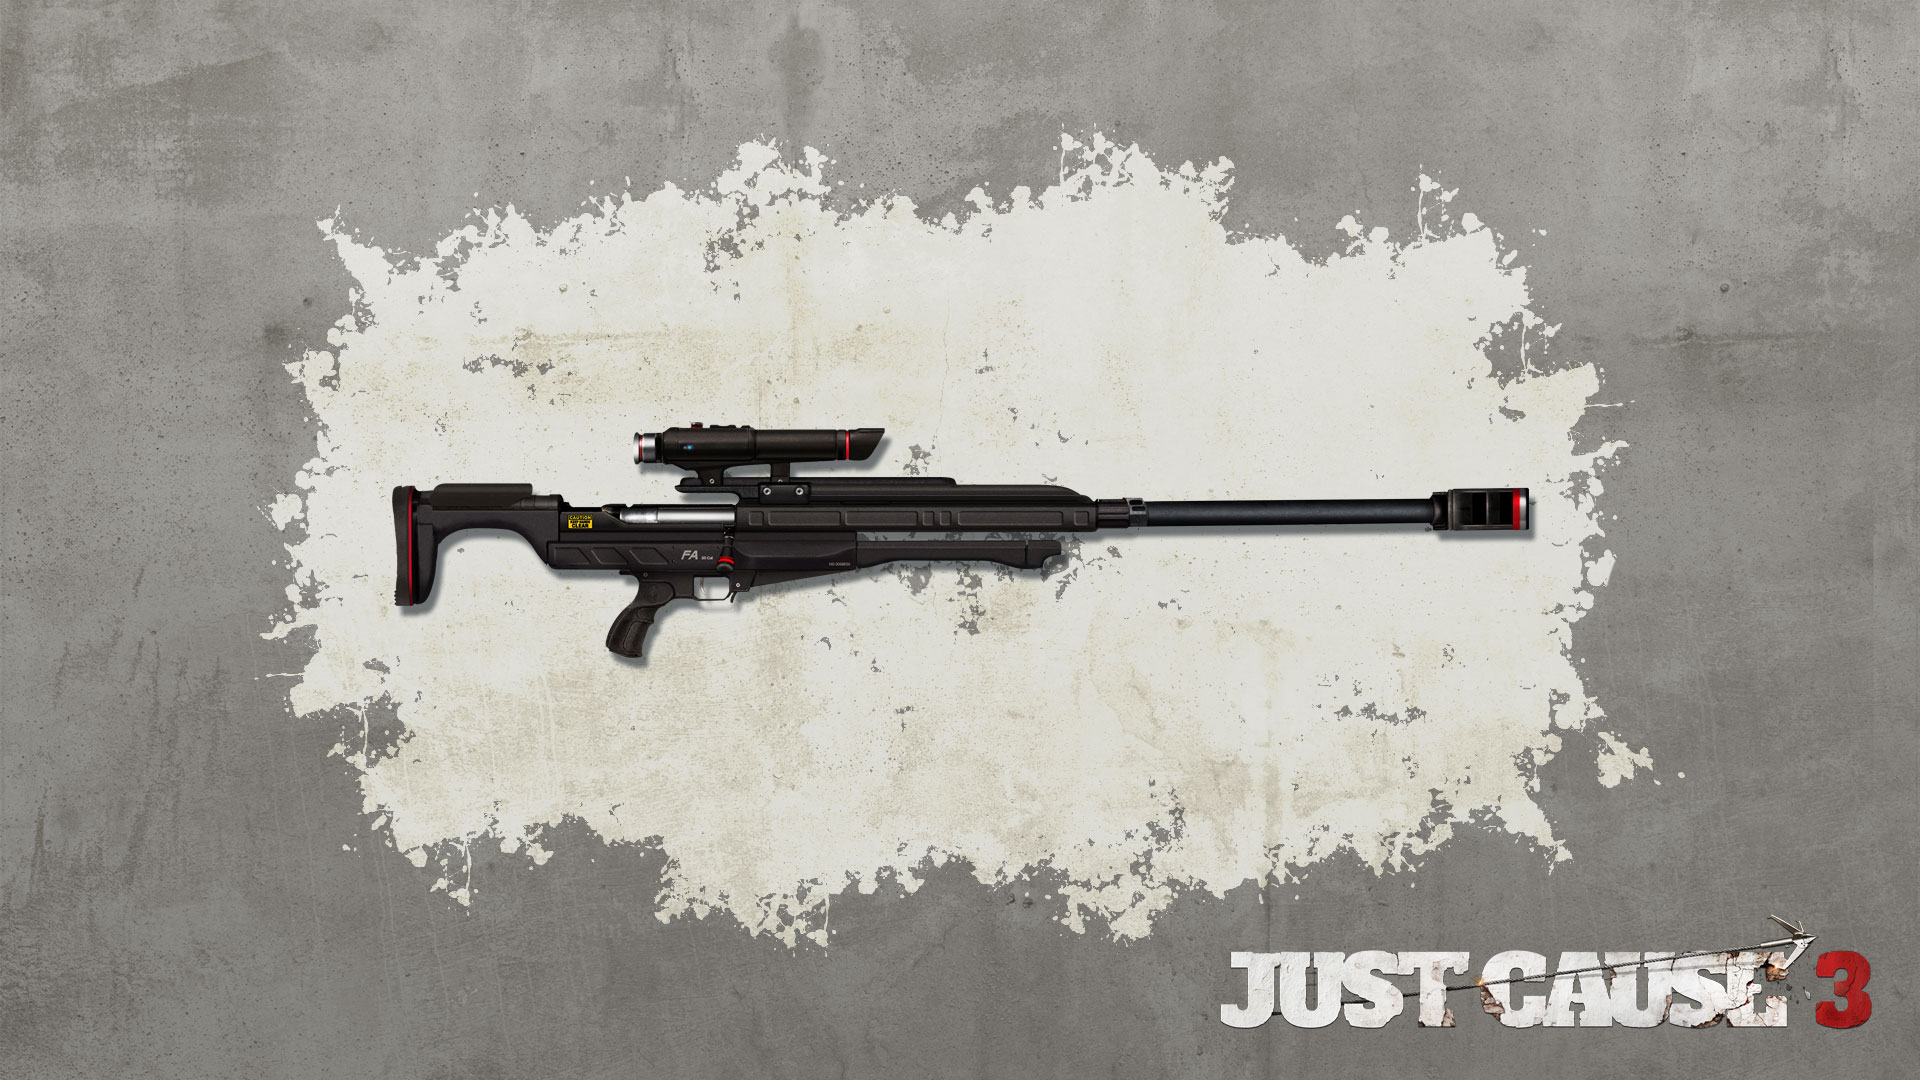 Just Cause 3 - Final Argument Sniper Rifle DLC Steam CD Key 1.67 $